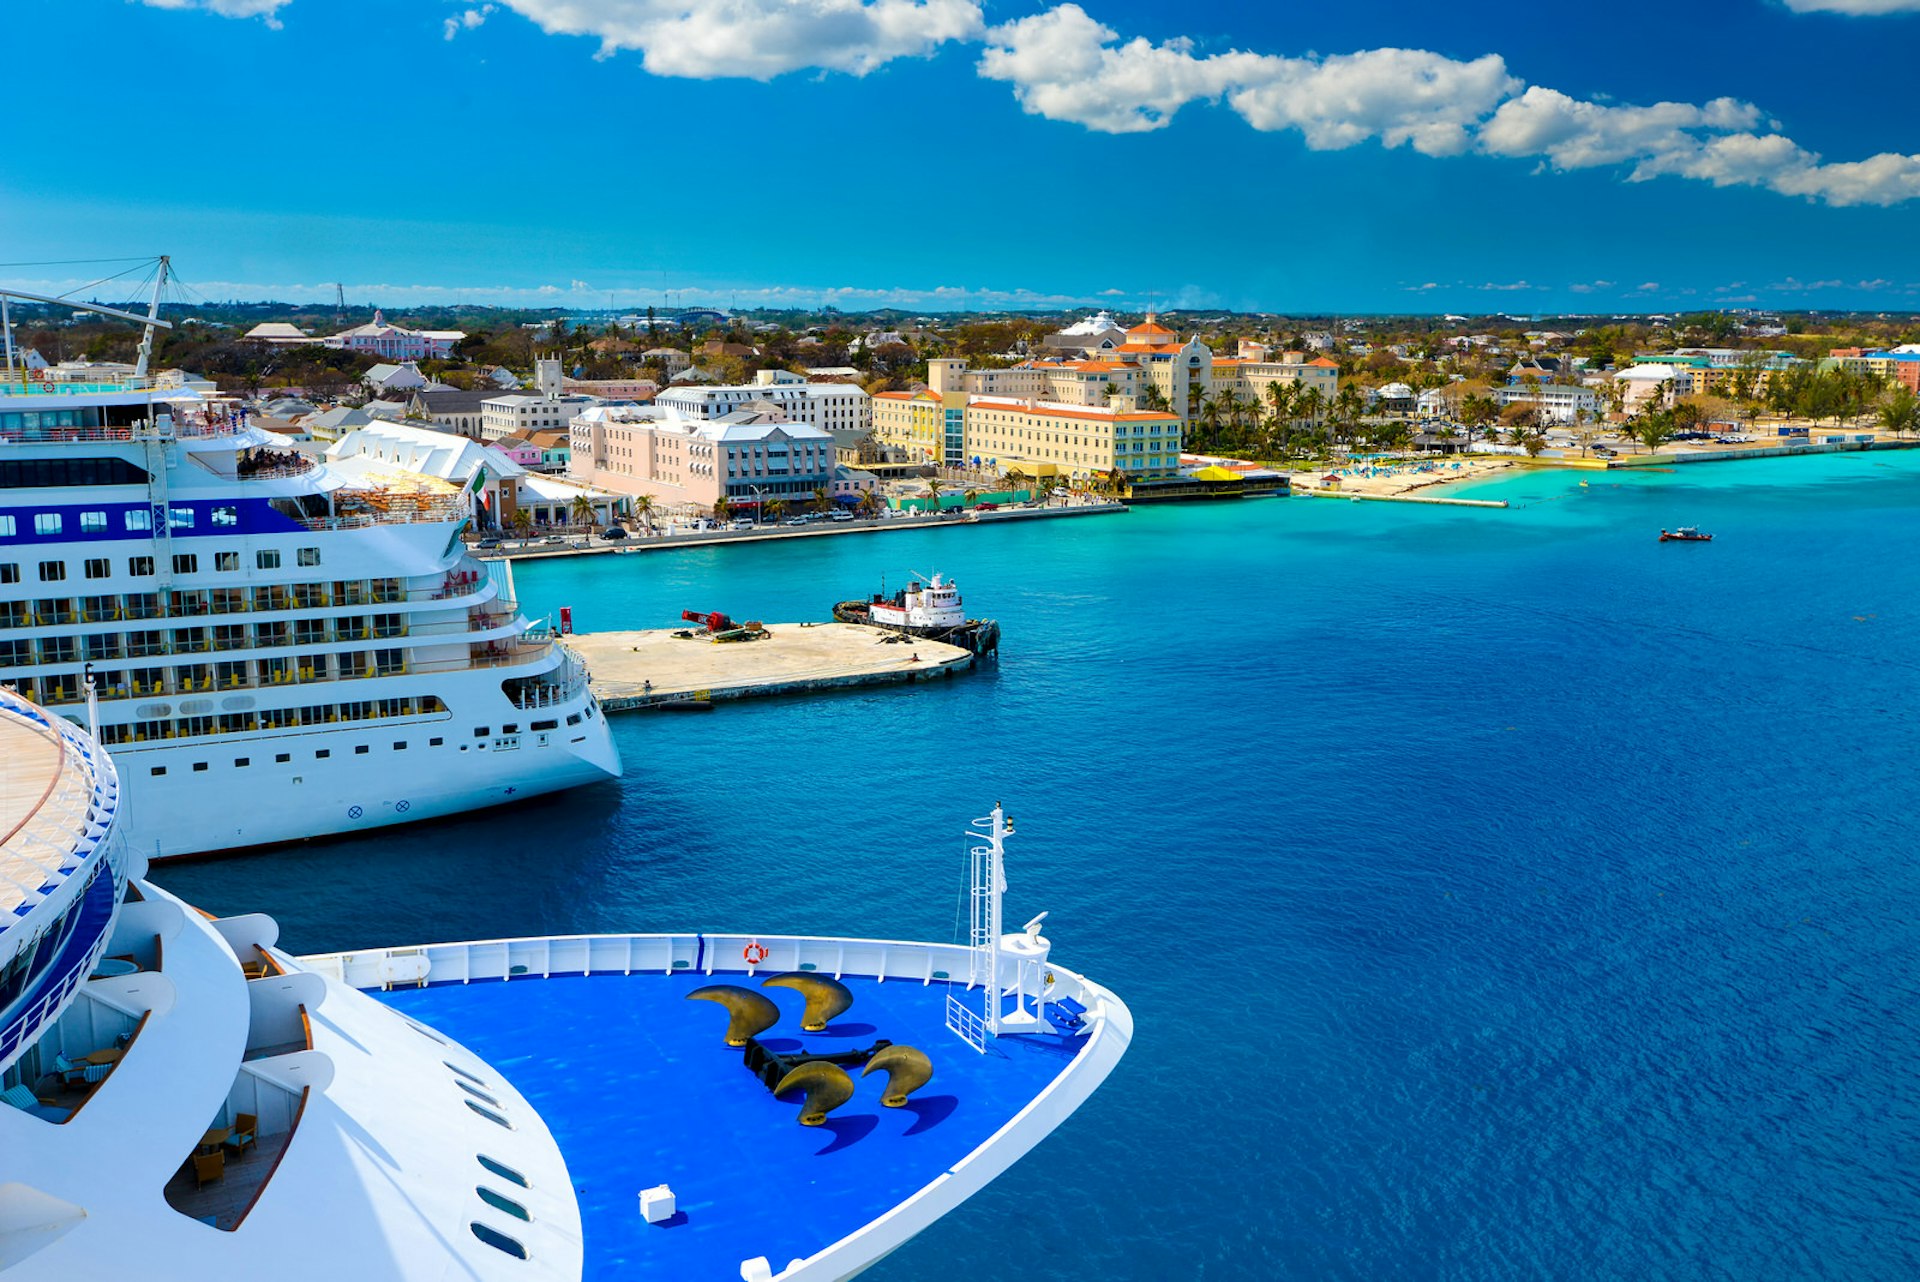 Cruise ships at Nassau, Bahamas © Costin Constantinescu / Shutterstock